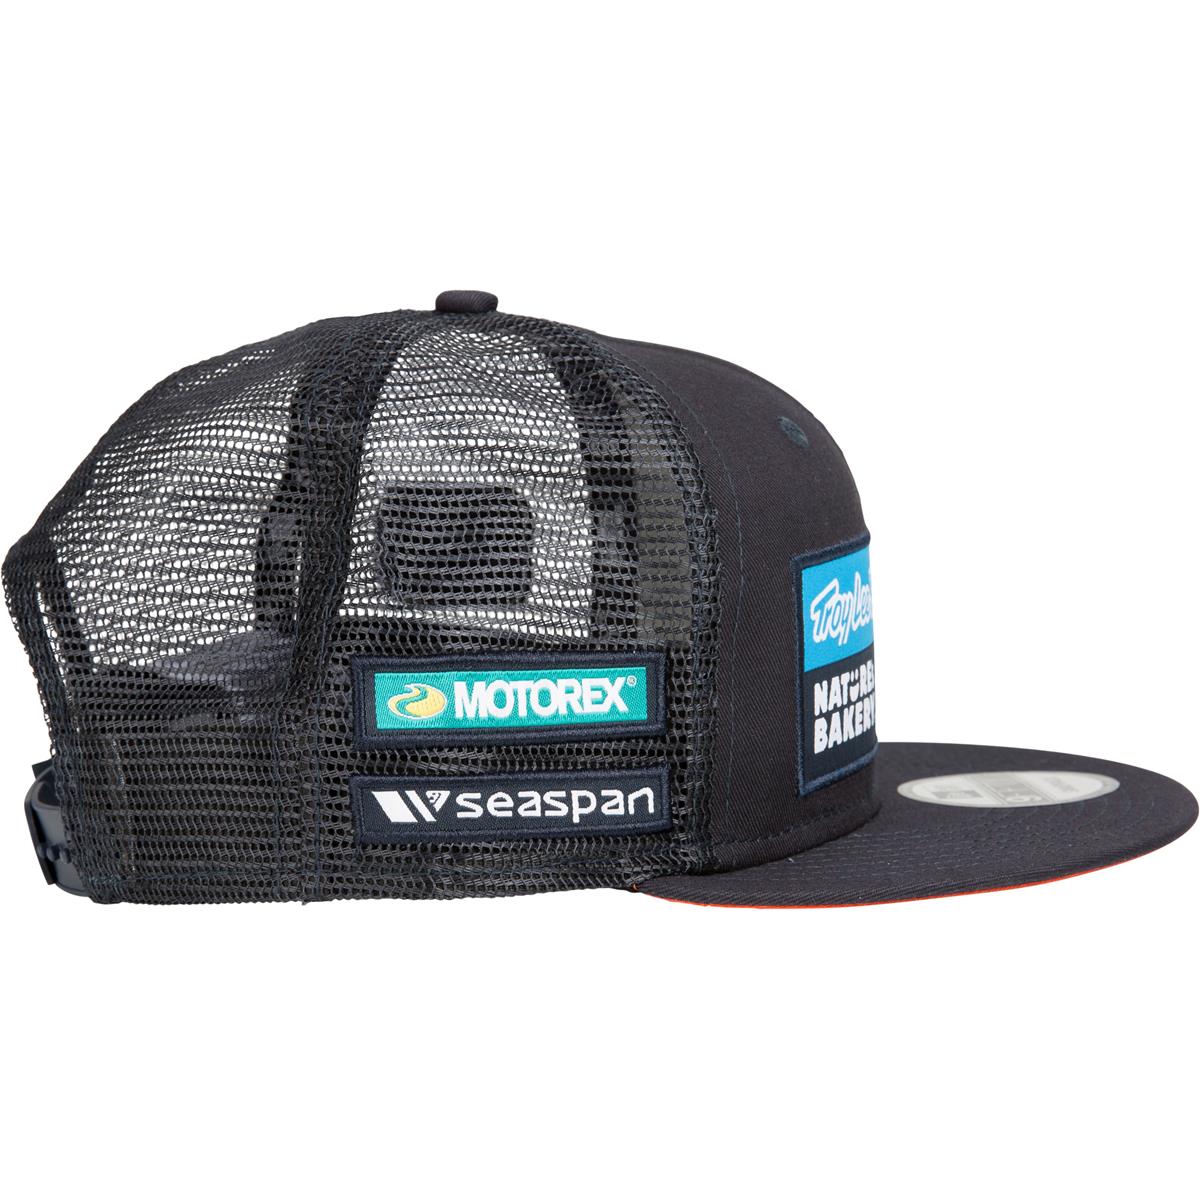 Troy Lee Designs MX Motocross Lifestyle KTM Team Navy Snapback Cap Hat 